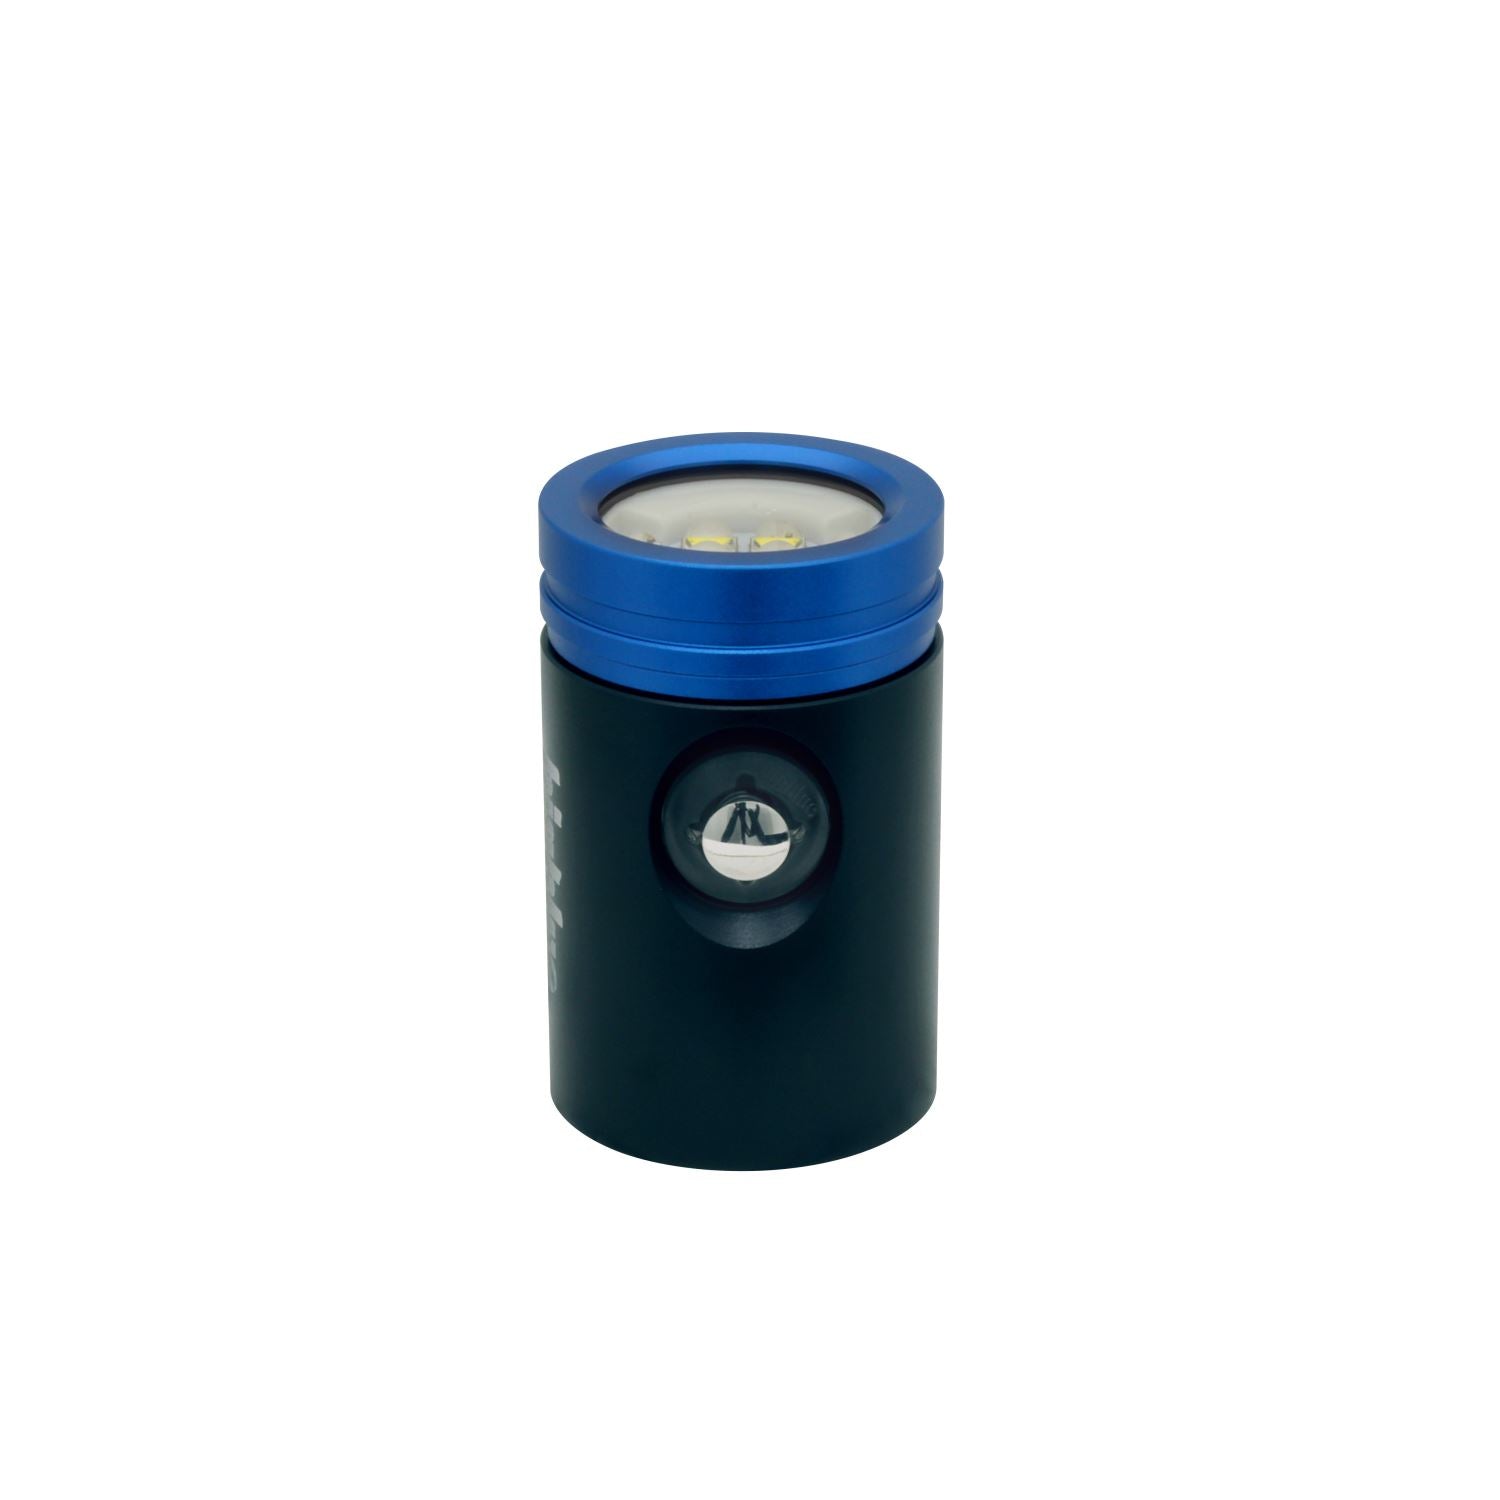 BigBlue 1800 Lumen Extra-Wide Video Light w/ Blue Color Mode - Black/Blue-